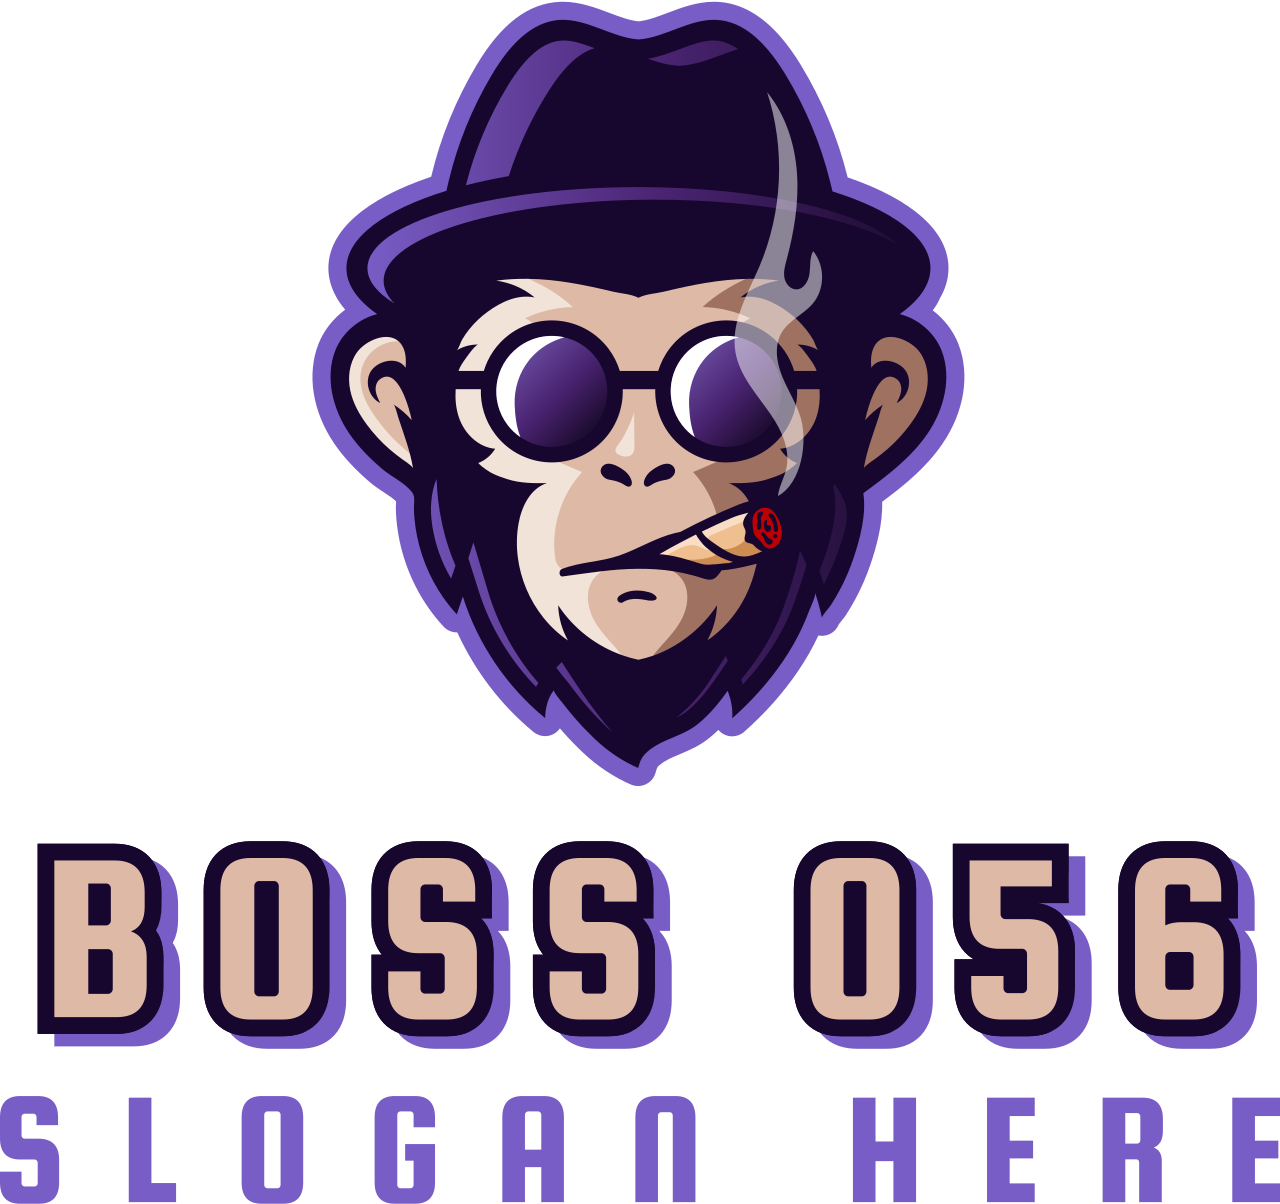 Boss 056's logo